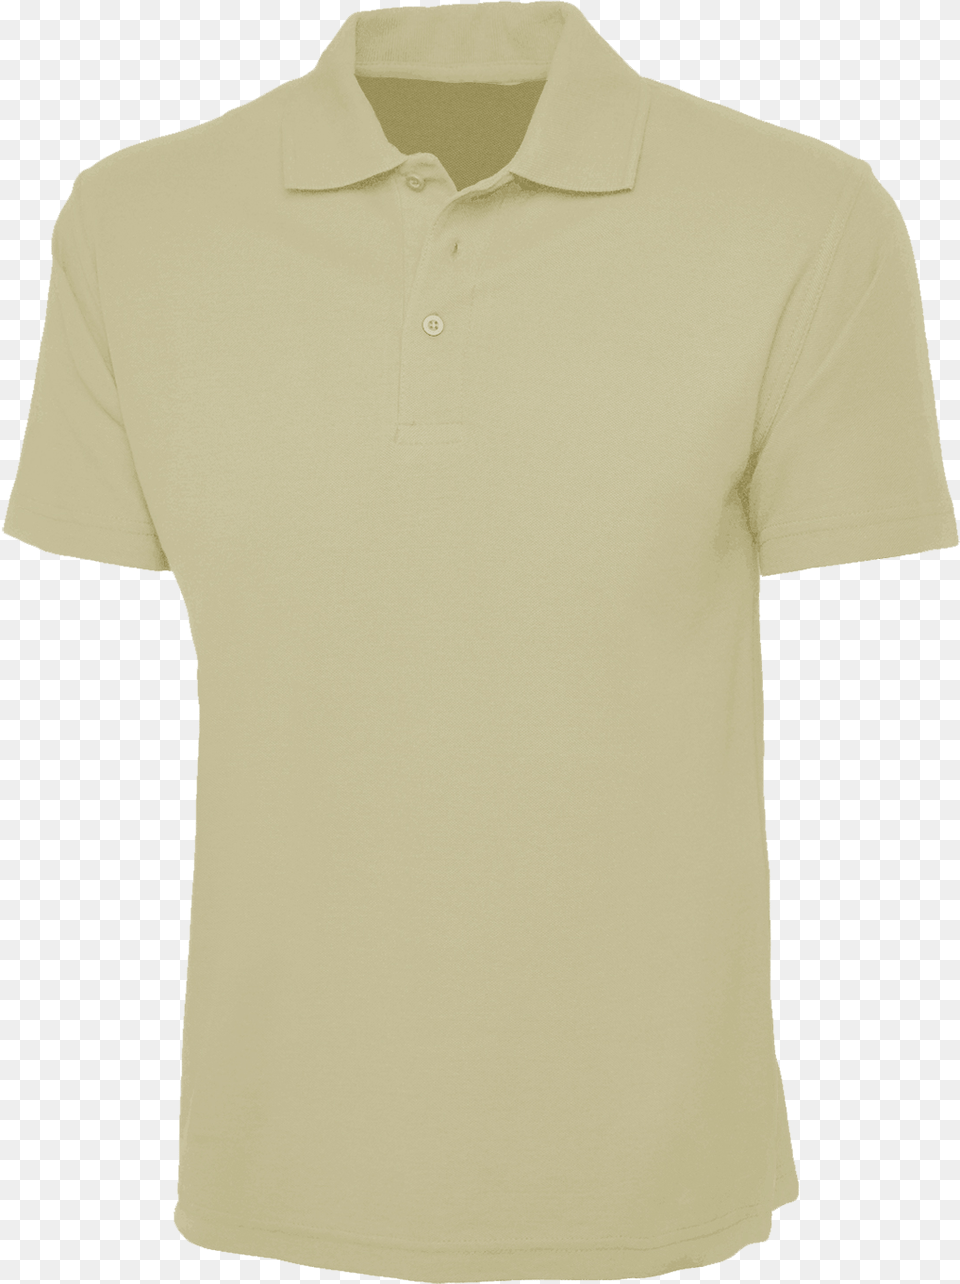 Plain Yellow Gold Polo Shirt Powder Blue Polo Shirt, Clothing, T-shirt, Khaki Png Image